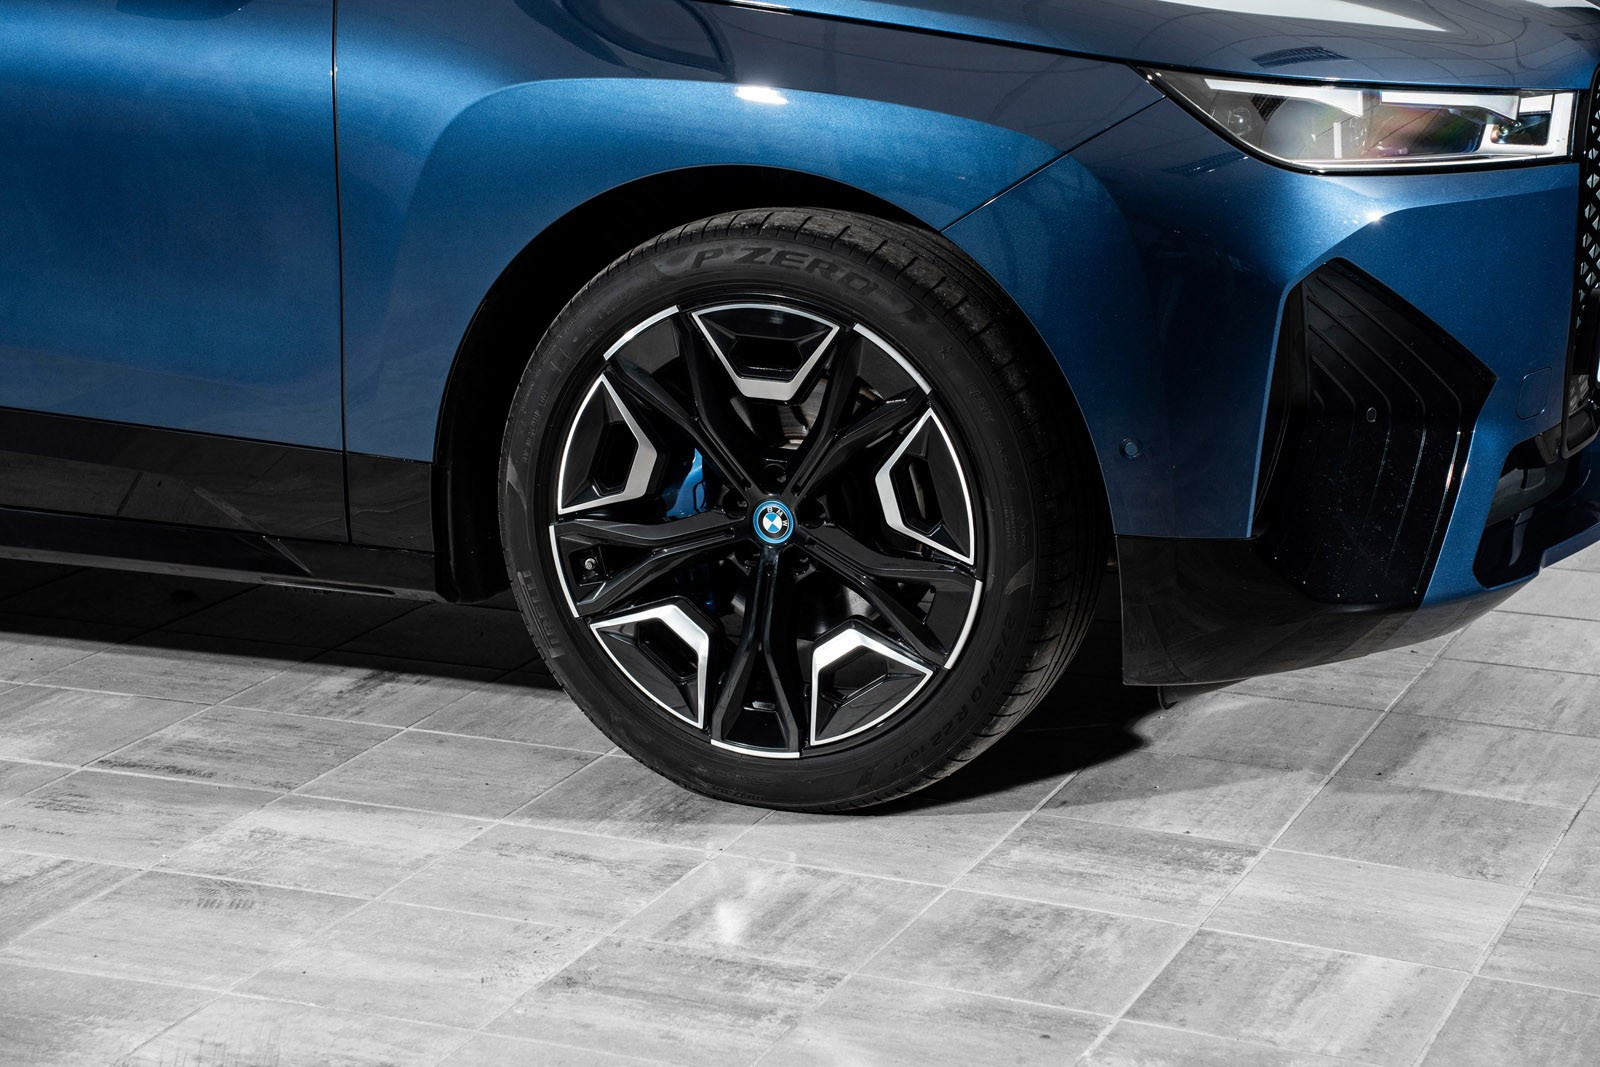 Tøffe 21" Air Performance sommerhjul på orginalfelg fra BMW med meget høy kvalitet